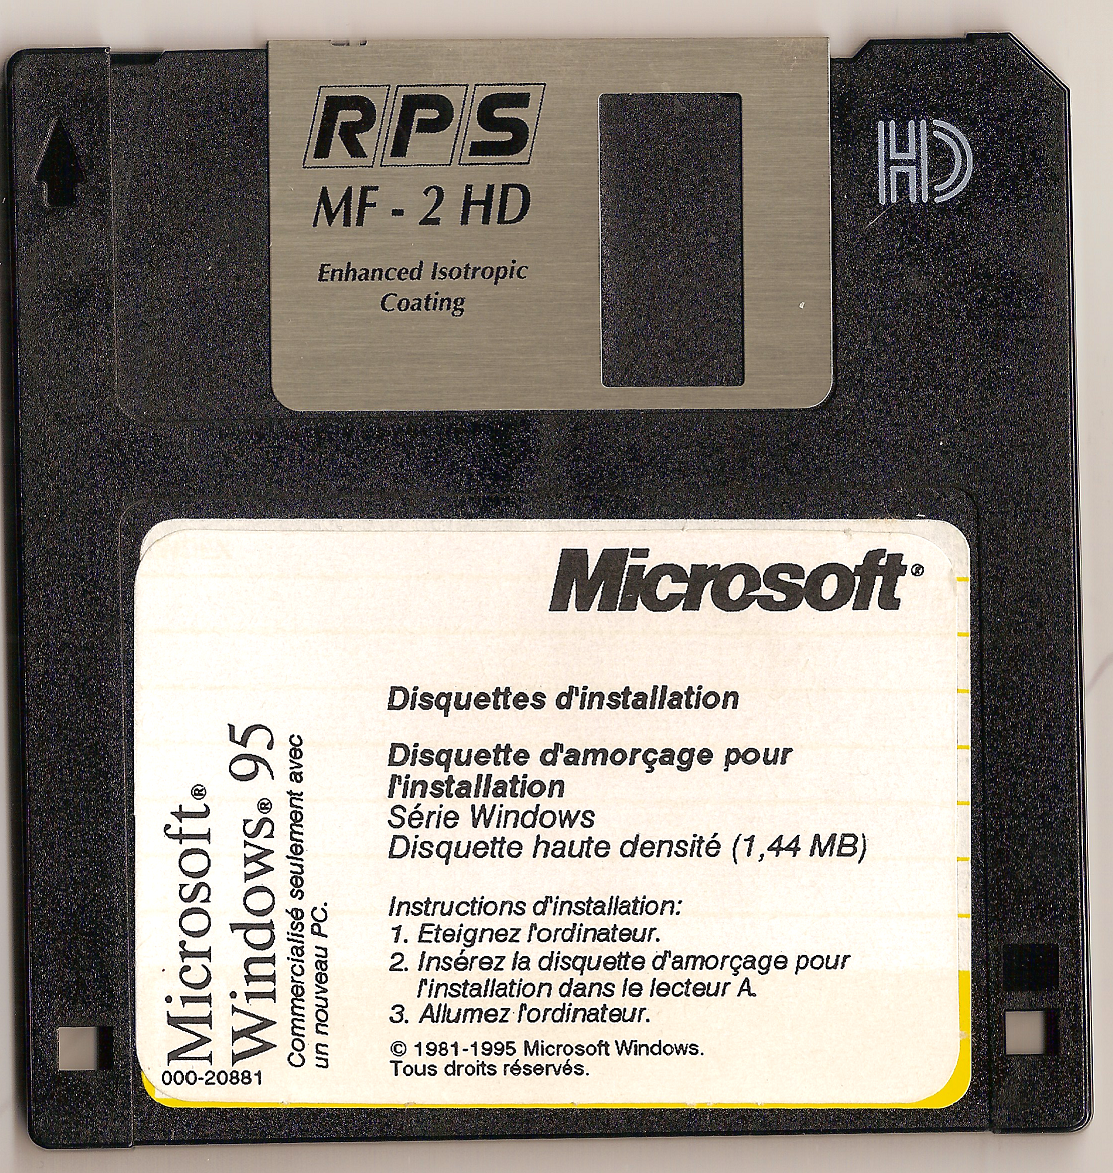 Download Torrent Windows 95 Floppy